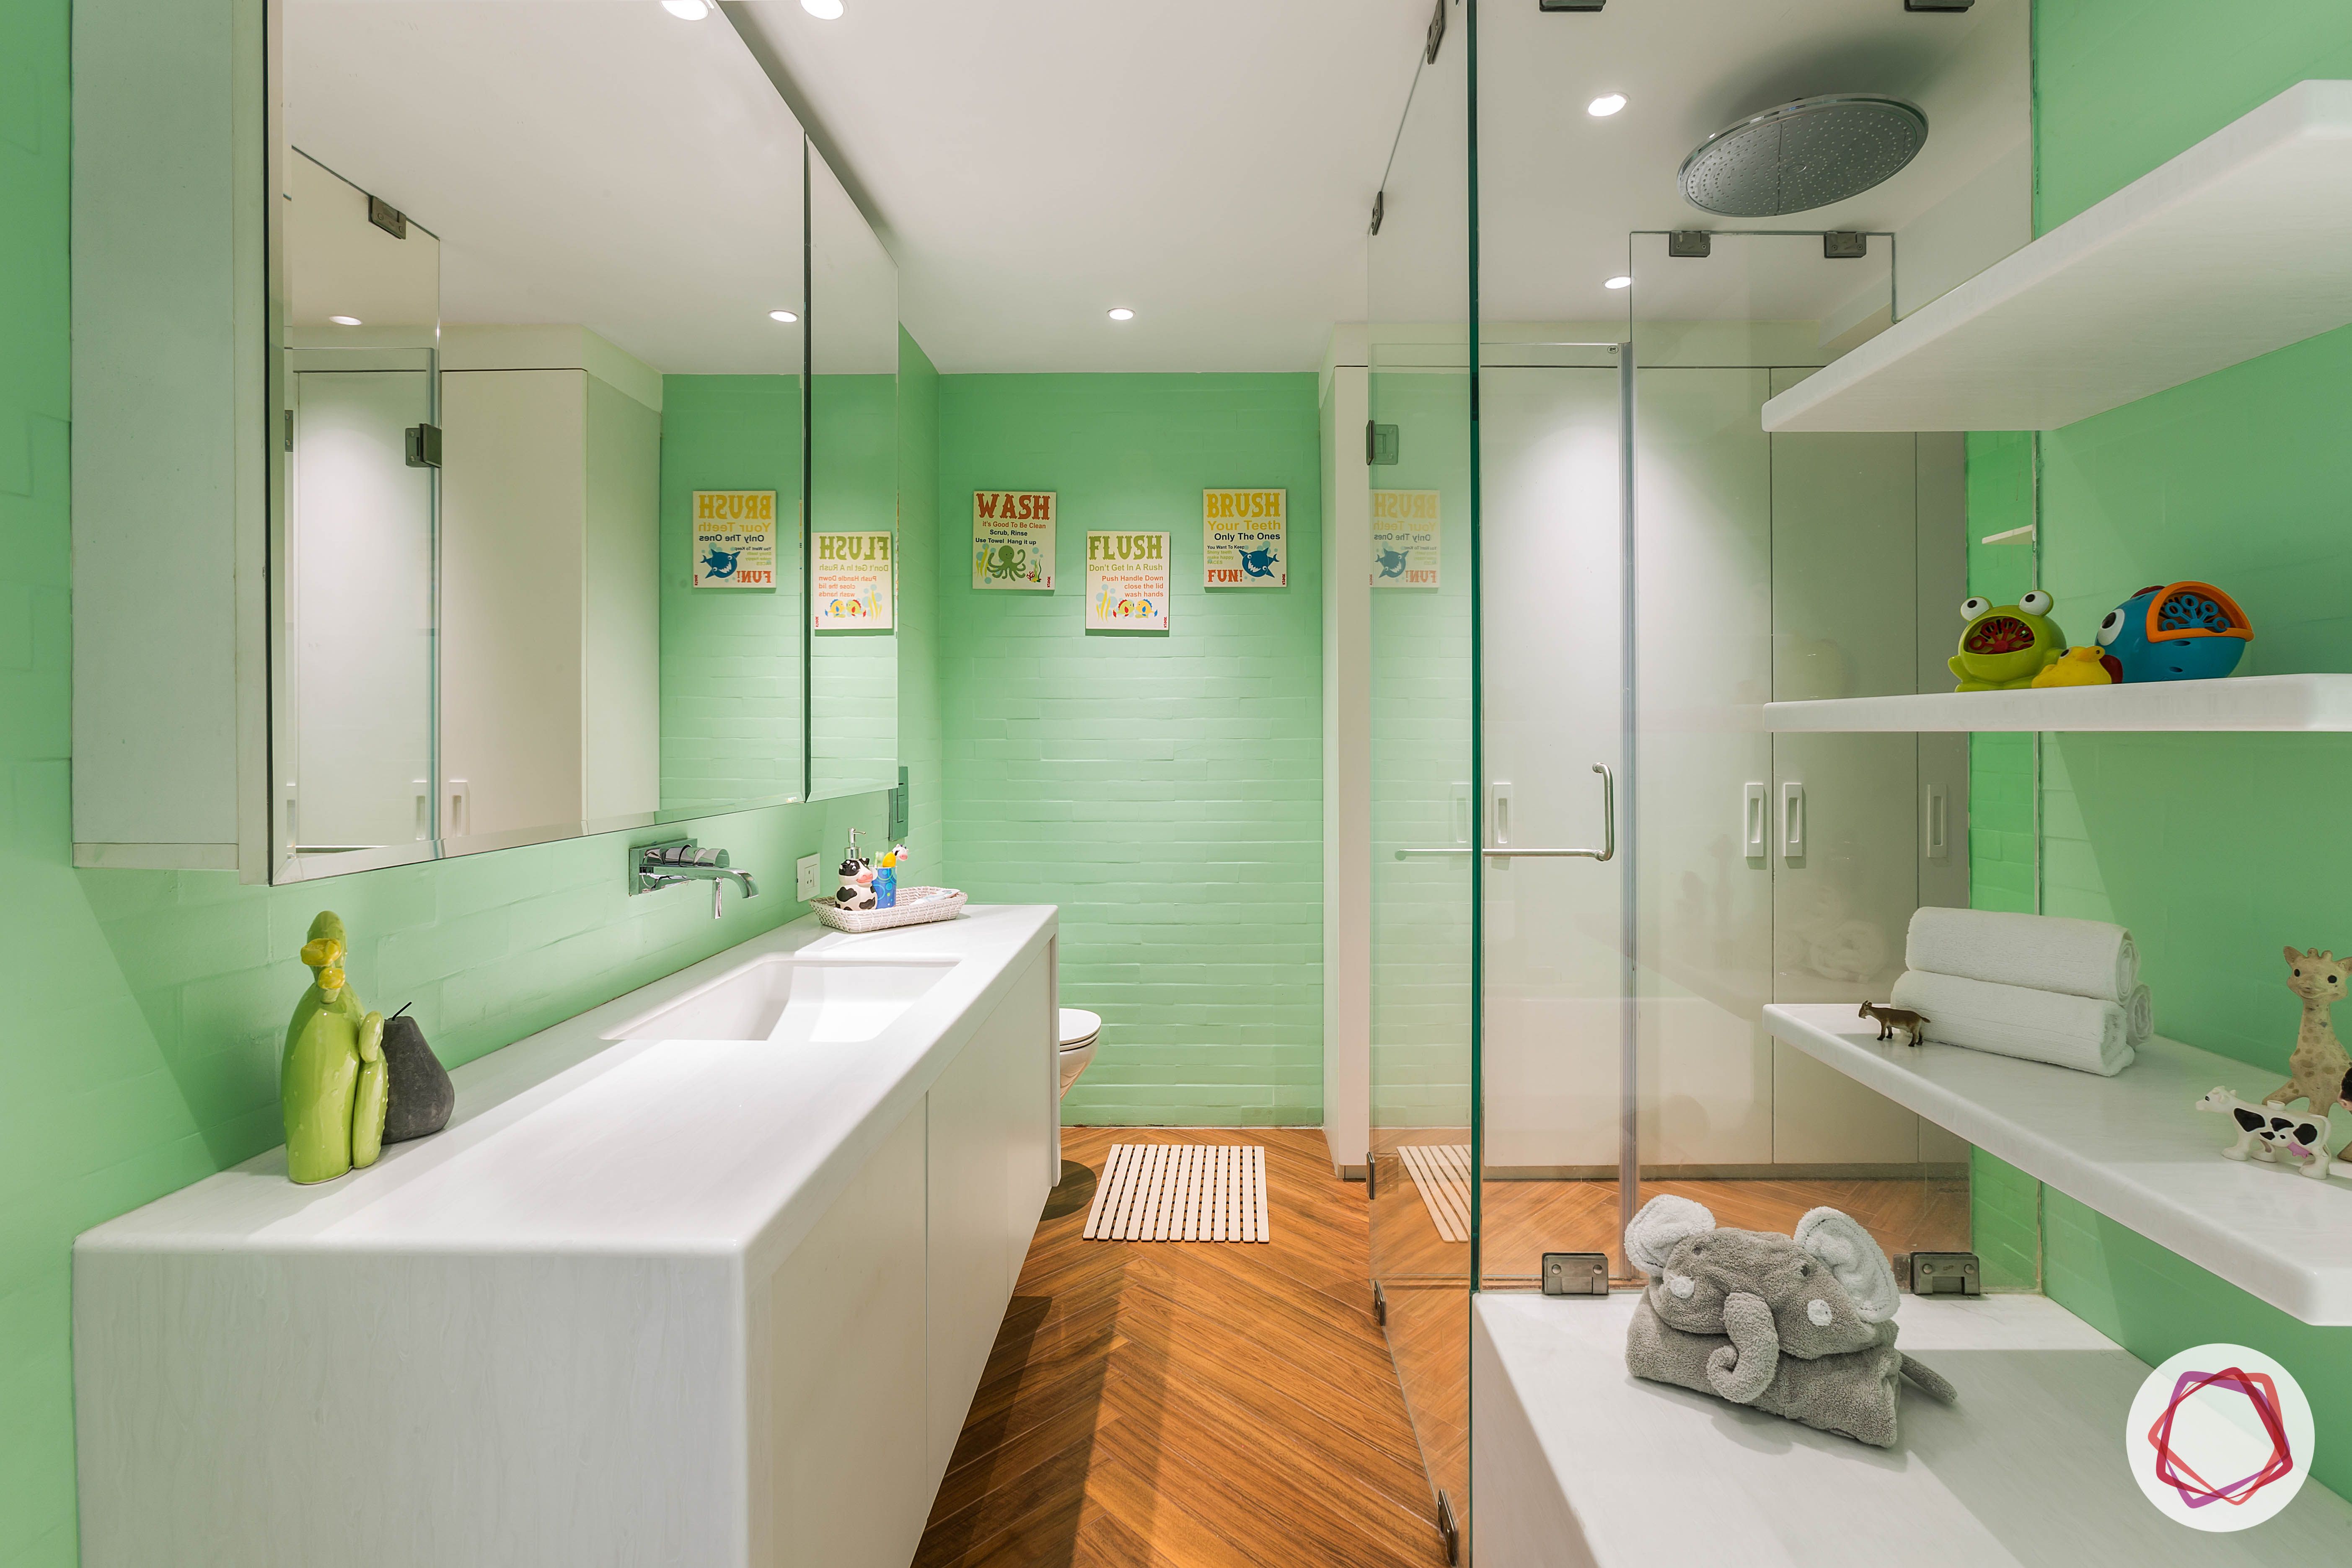 4bhk house plan-kids bathroom designs-kids bathroom-white-cabinets-mirror-wooden-floor